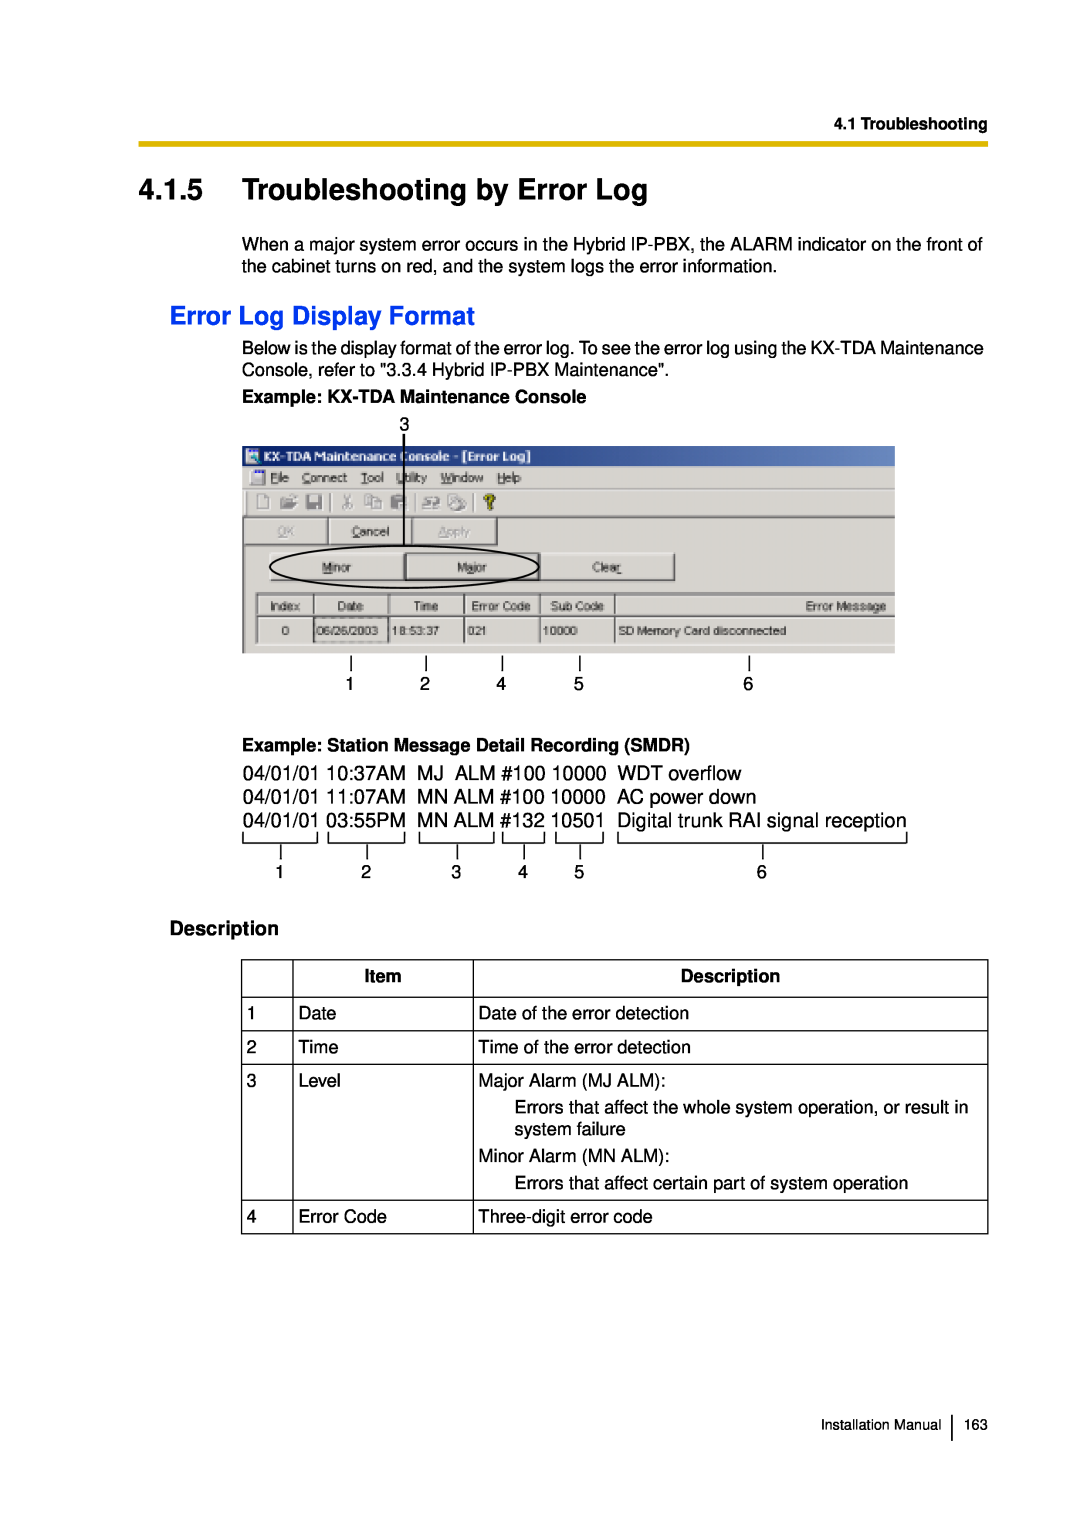 Panasonic KX-TDA30 installation manual 4.1.5Troubleshooting by Error Log, Error Log Display Format 